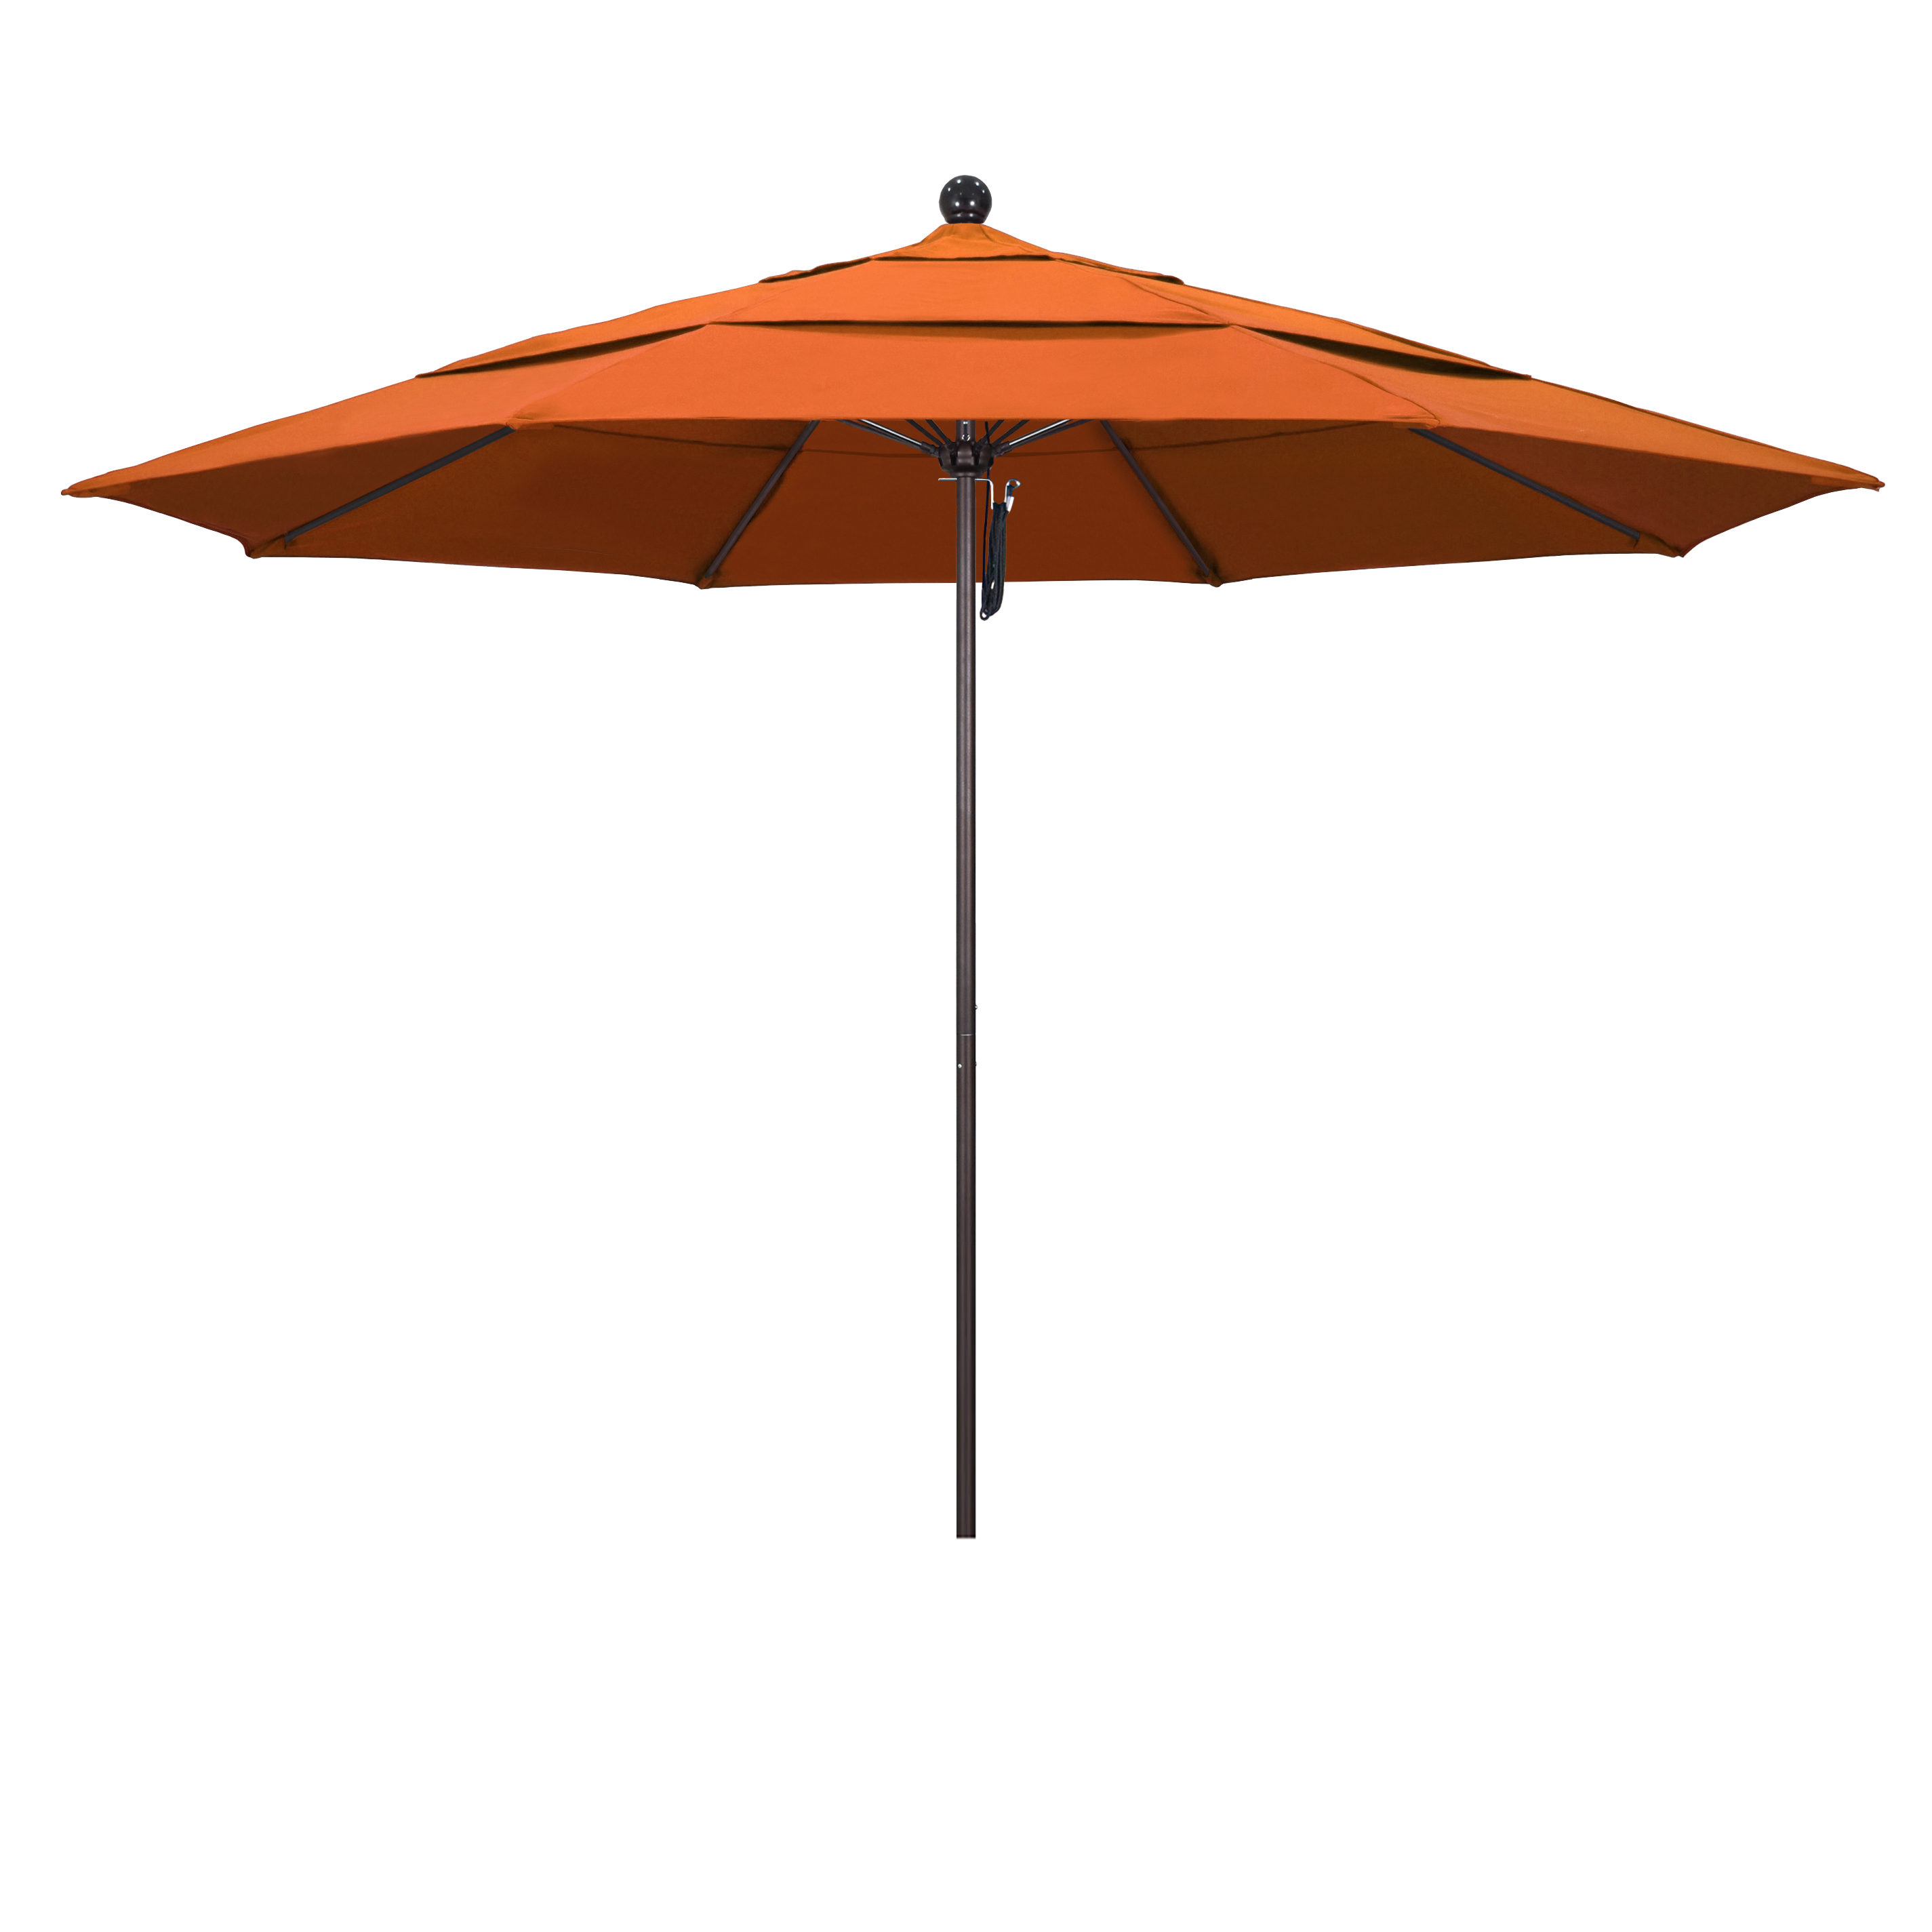 Picture of California Umbrella ALTO118117-5417-DWV 11 ft. Fiberglass Pulley Open Double Vents Market Umbrella - Bronze and Sunbrella-Tuscan